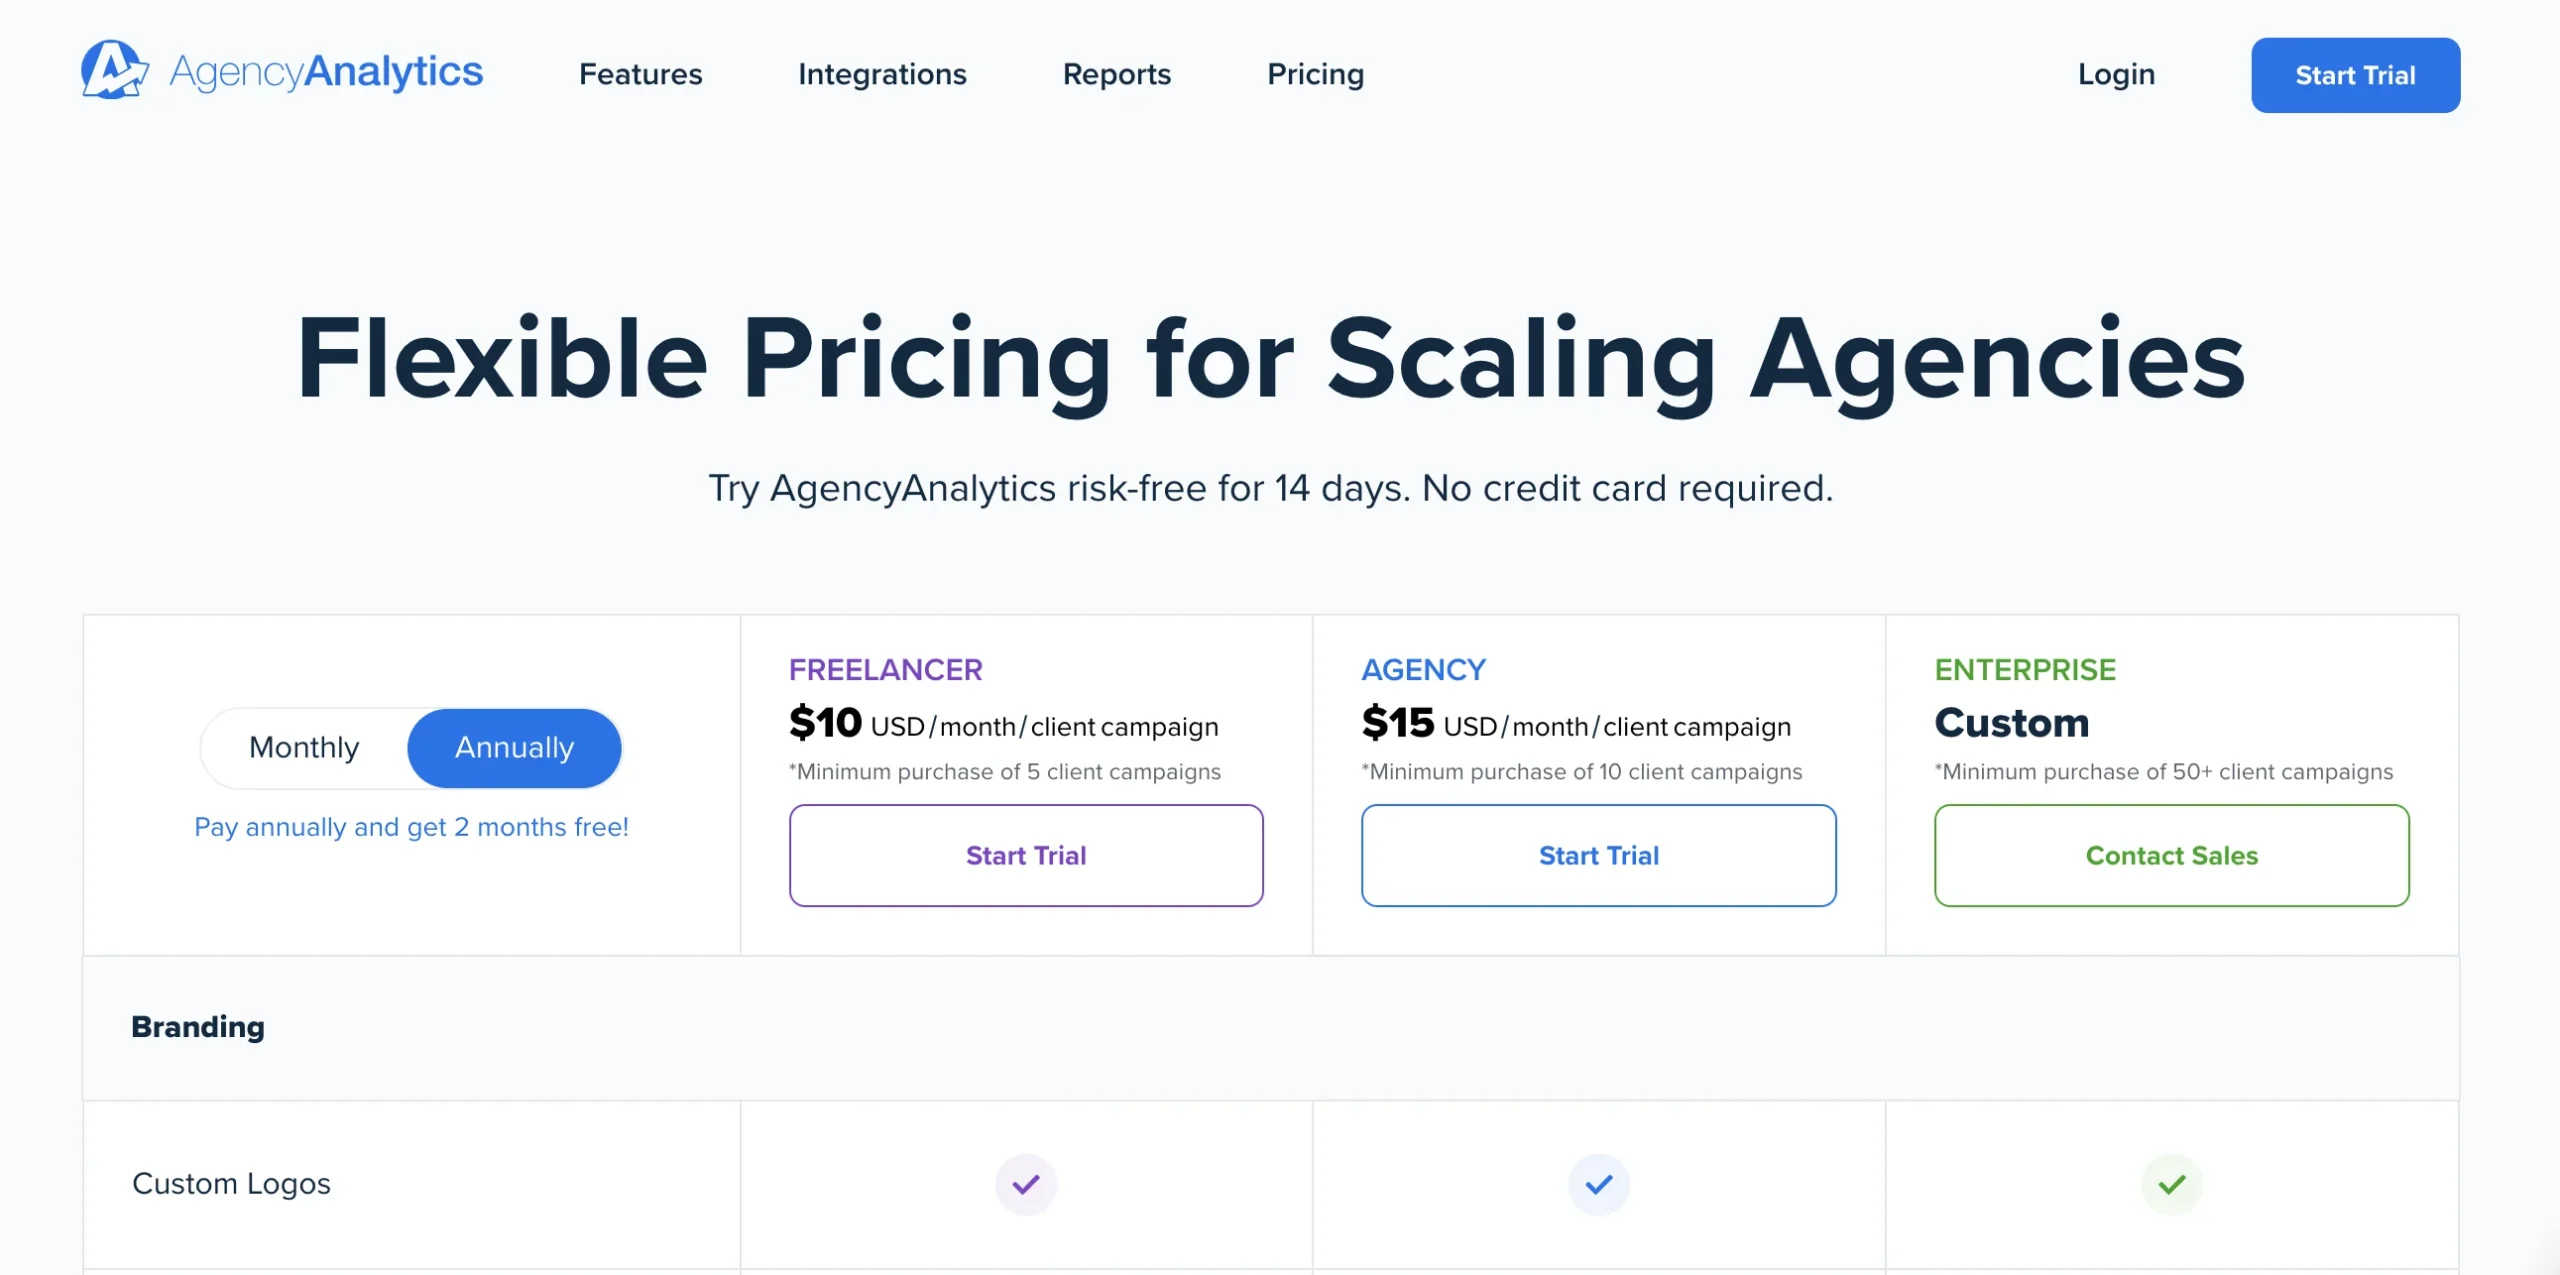 AgencyAnalytics price-seo tool for agencies